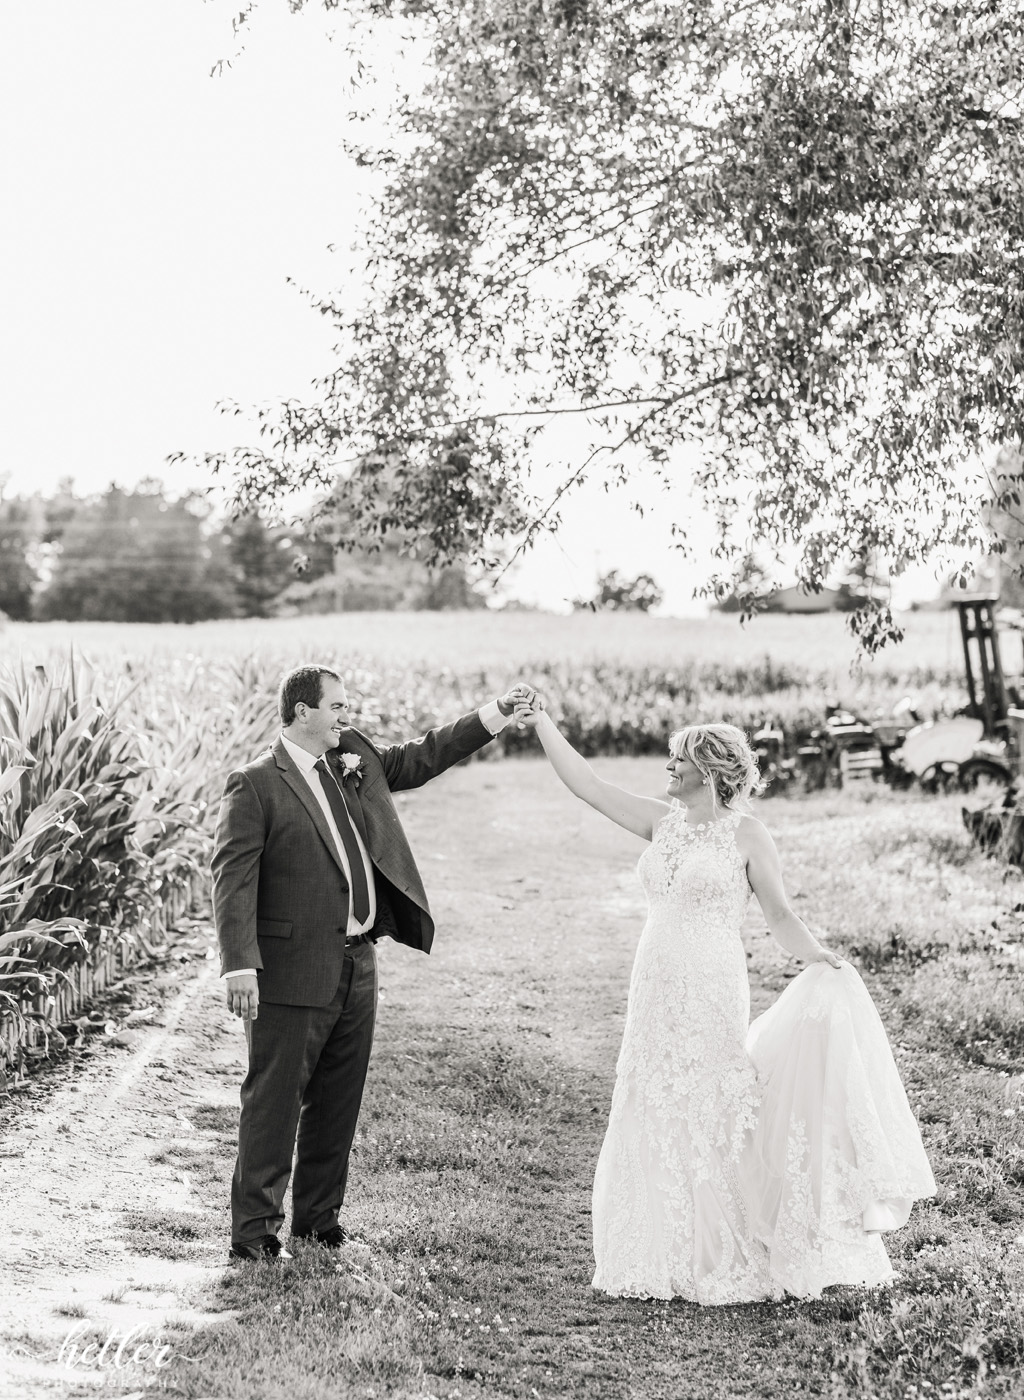 West Michigan backyard intimate wedding photography in Grant Michigan